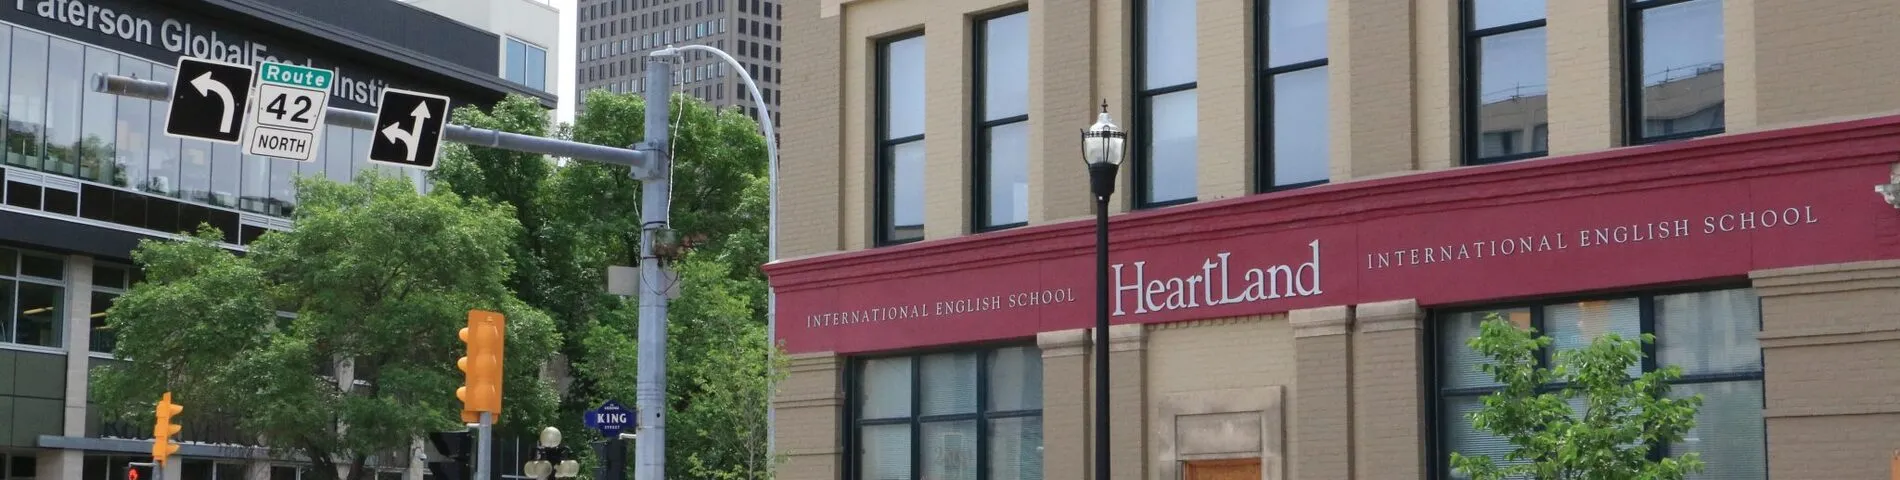 Heartland International English School resim 1